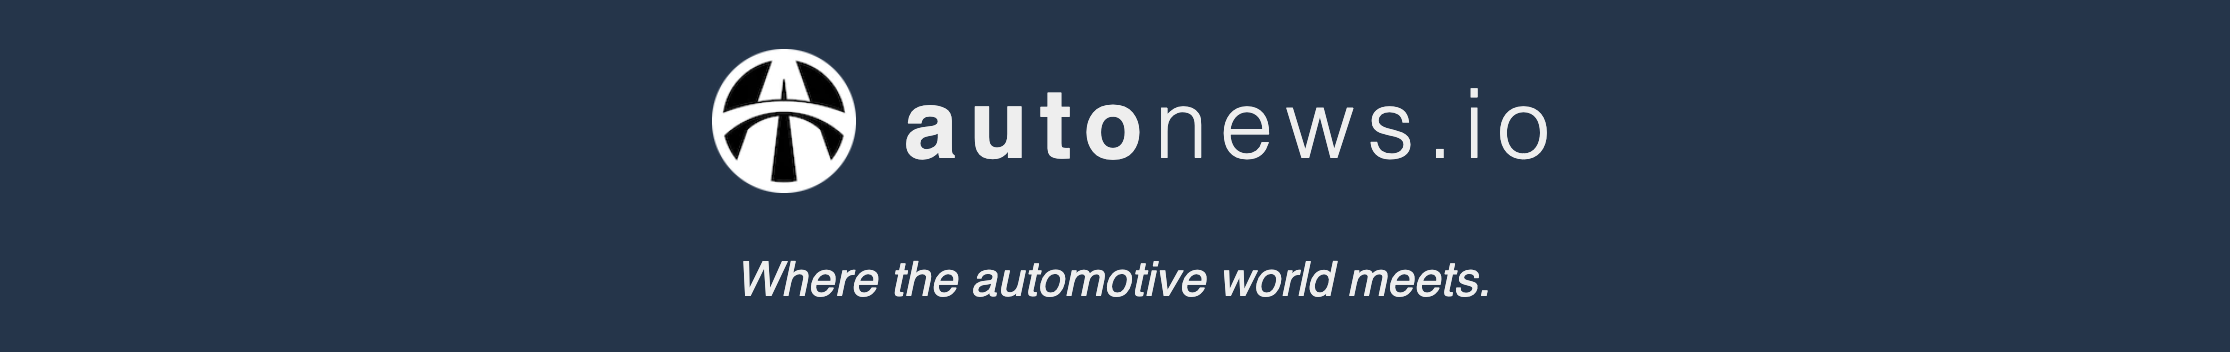 sponsor image of autonews.io